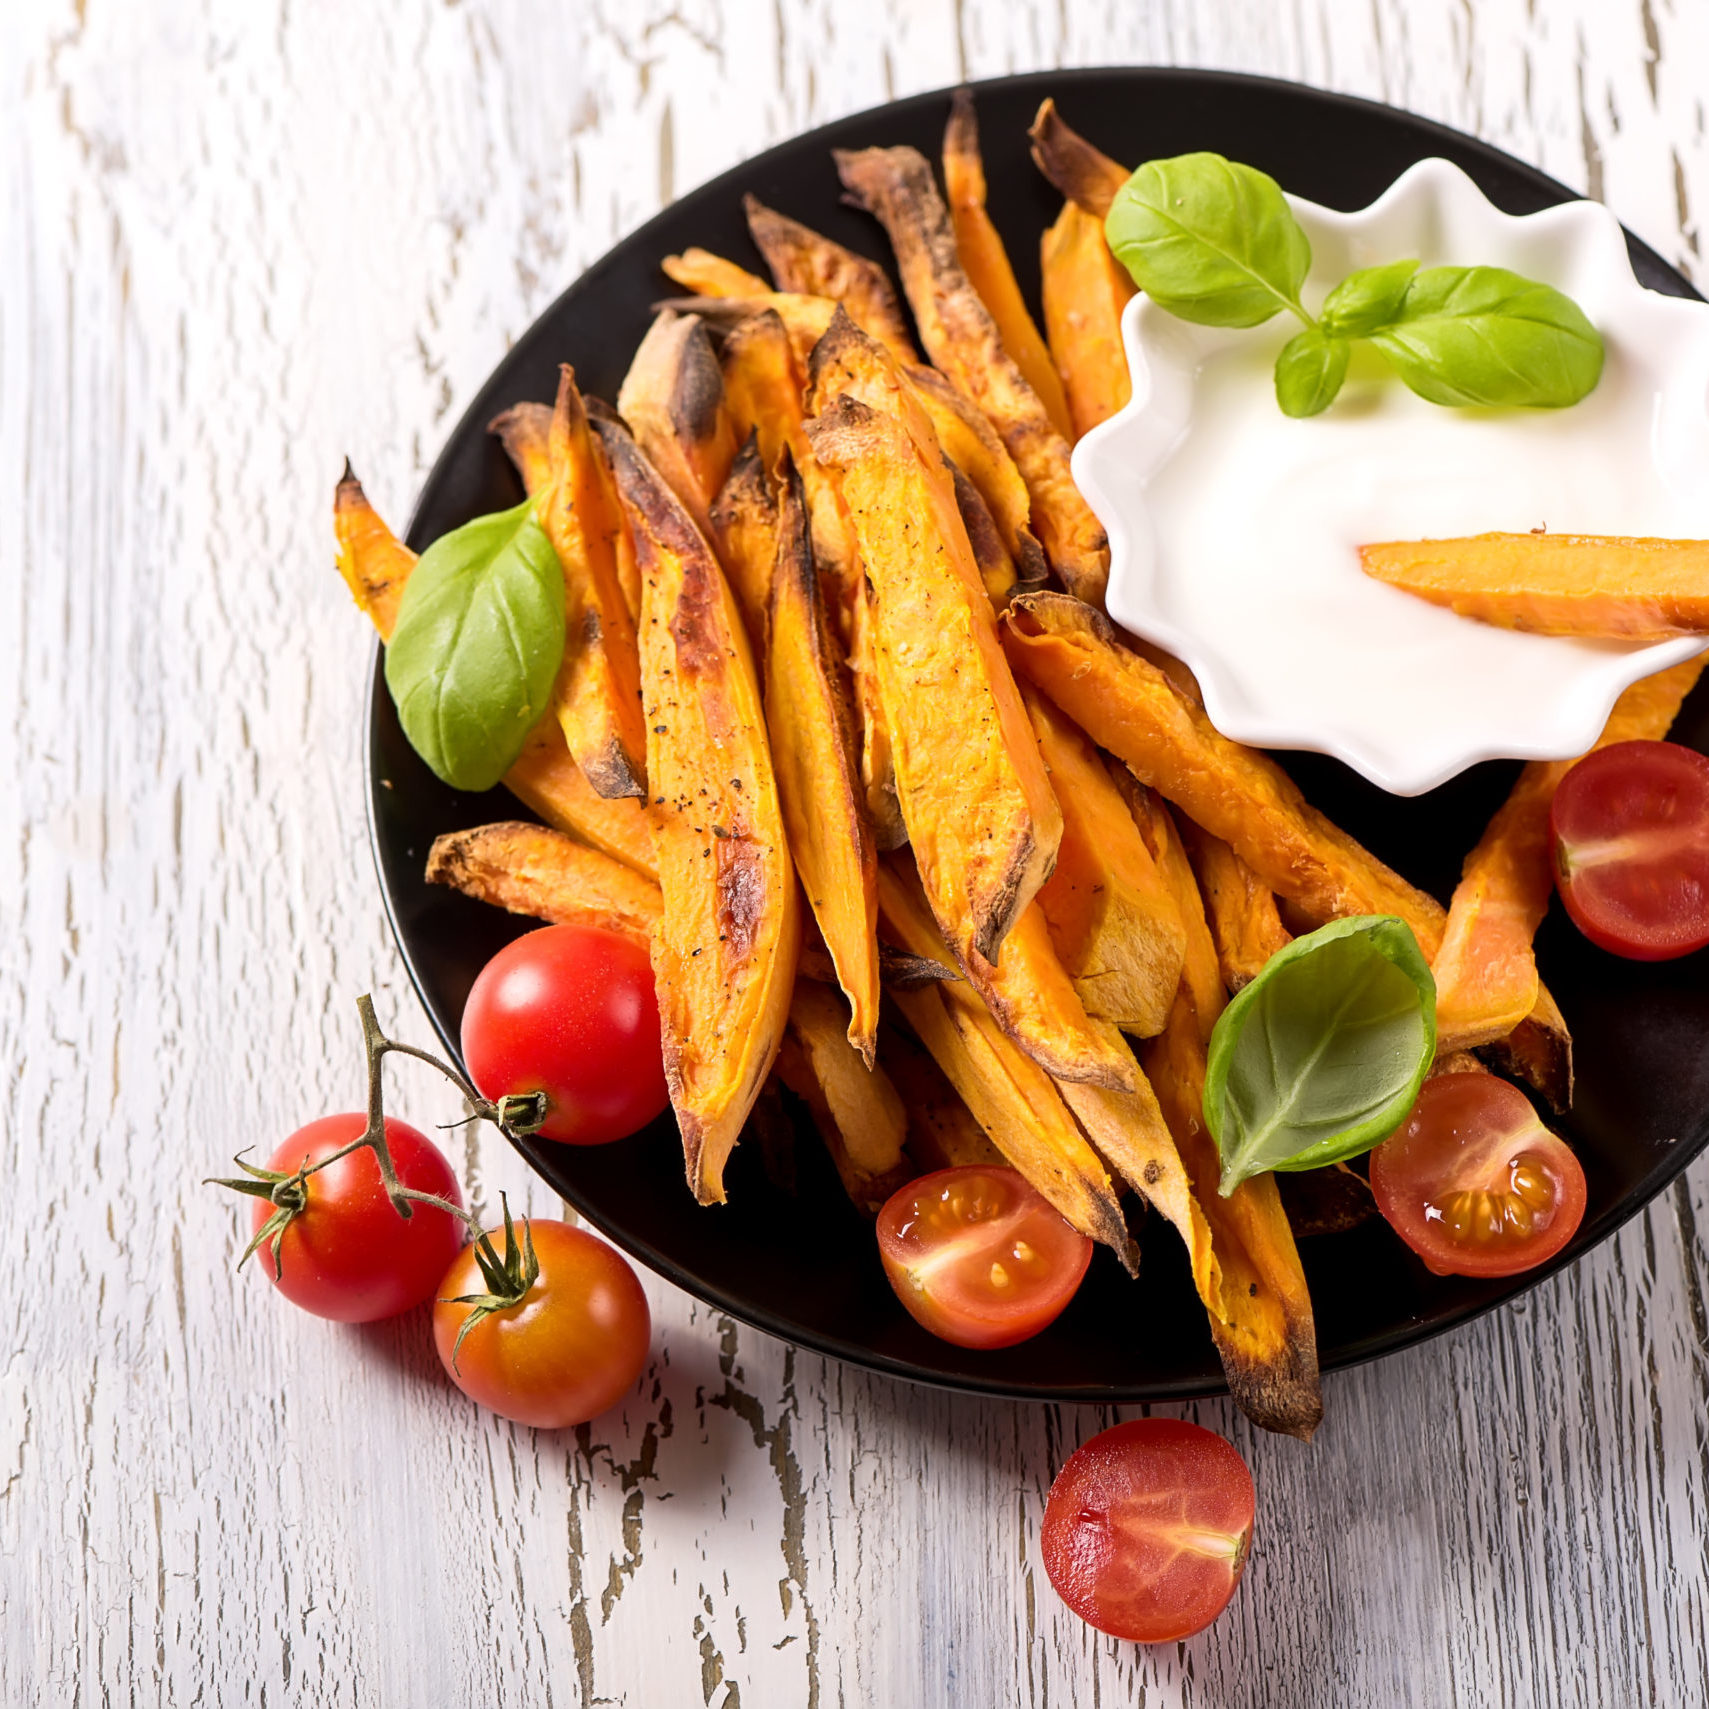 Healthy homemade sweet potato fries, vegan vegetarian snack with dip